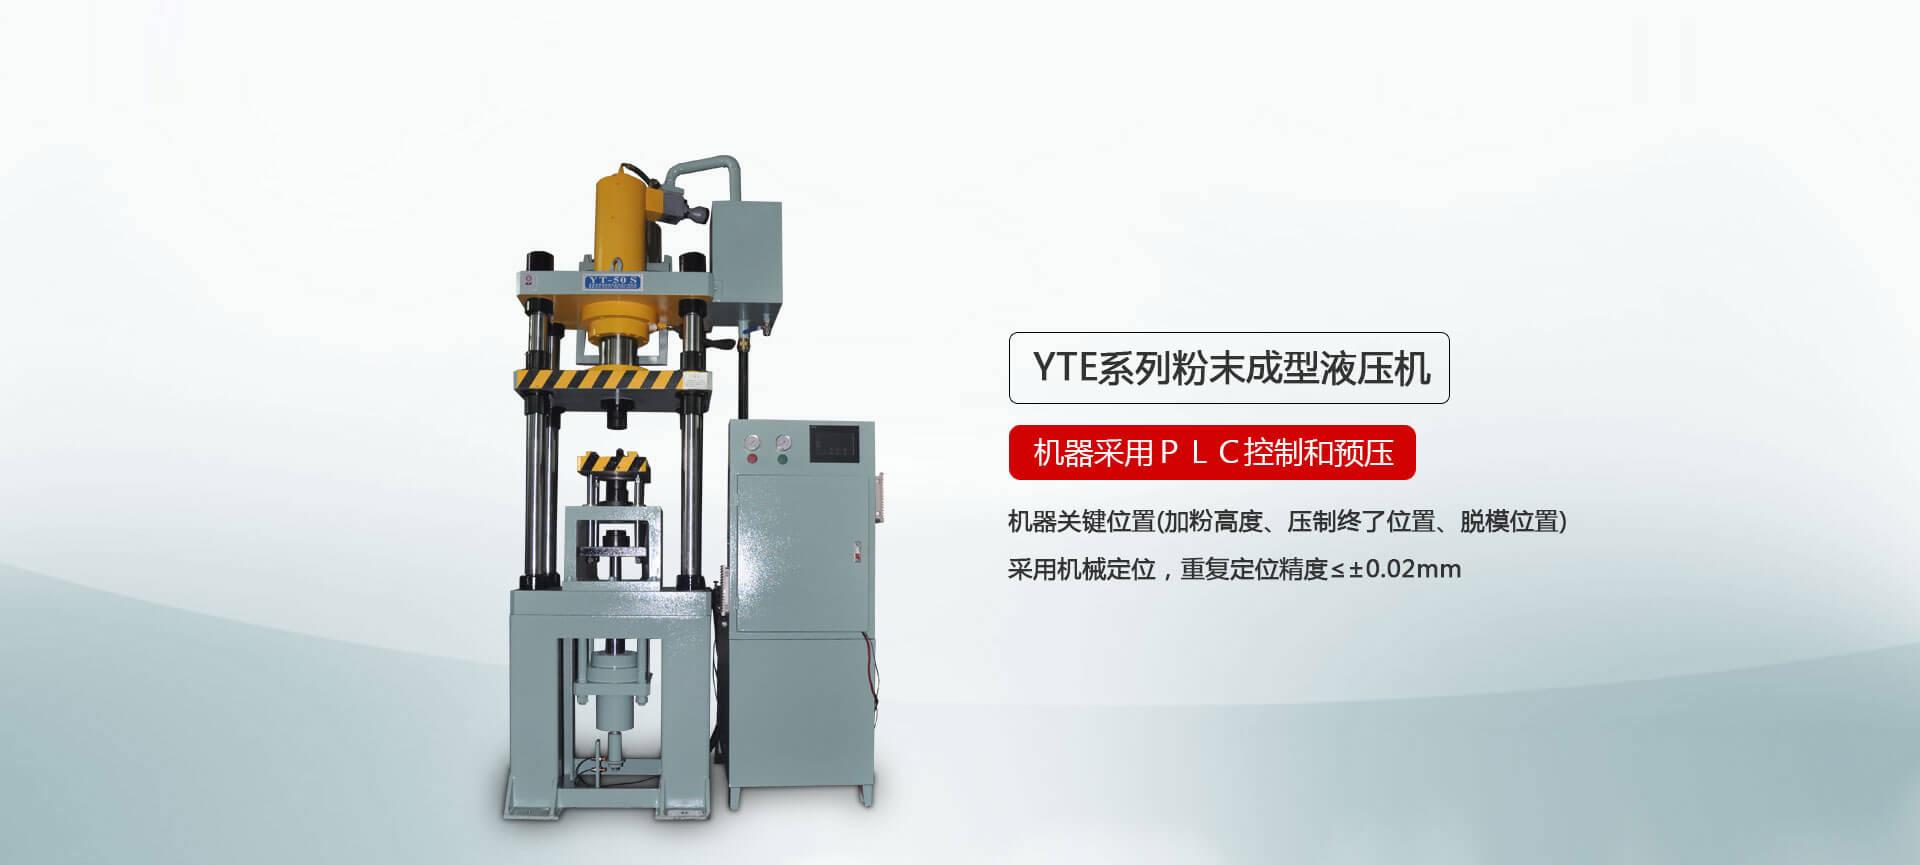 YTM系列粉末成型液压机